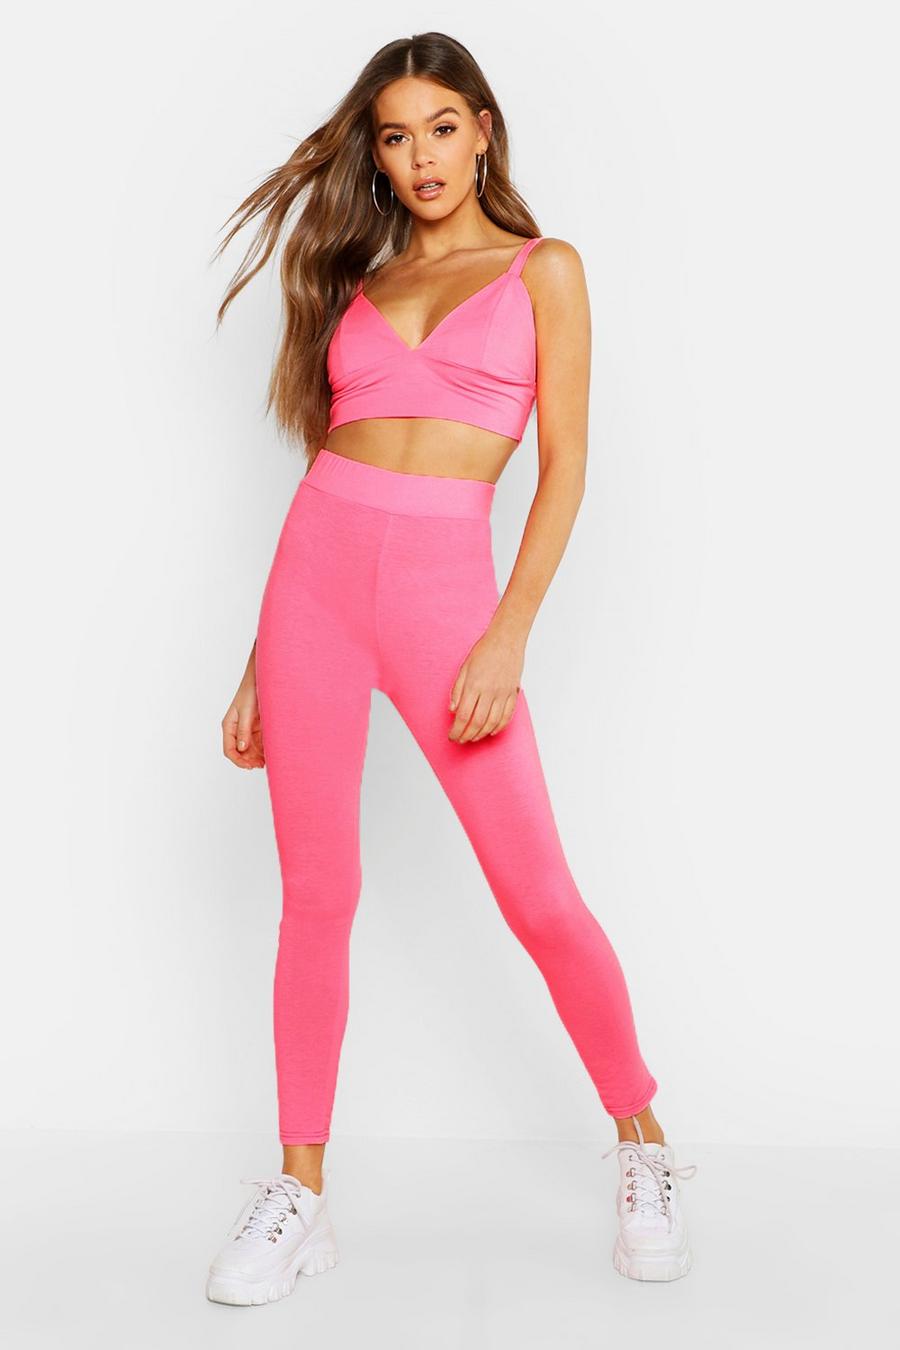 https://media.boohoo.com/i/boohoo/fzz98588_neon-pink_xl/female-neon-pink-fit-neon-workout-leggings/?w=900&qlt=default&fmt.jp2.qlt=70&fmt=auto&sm=fit